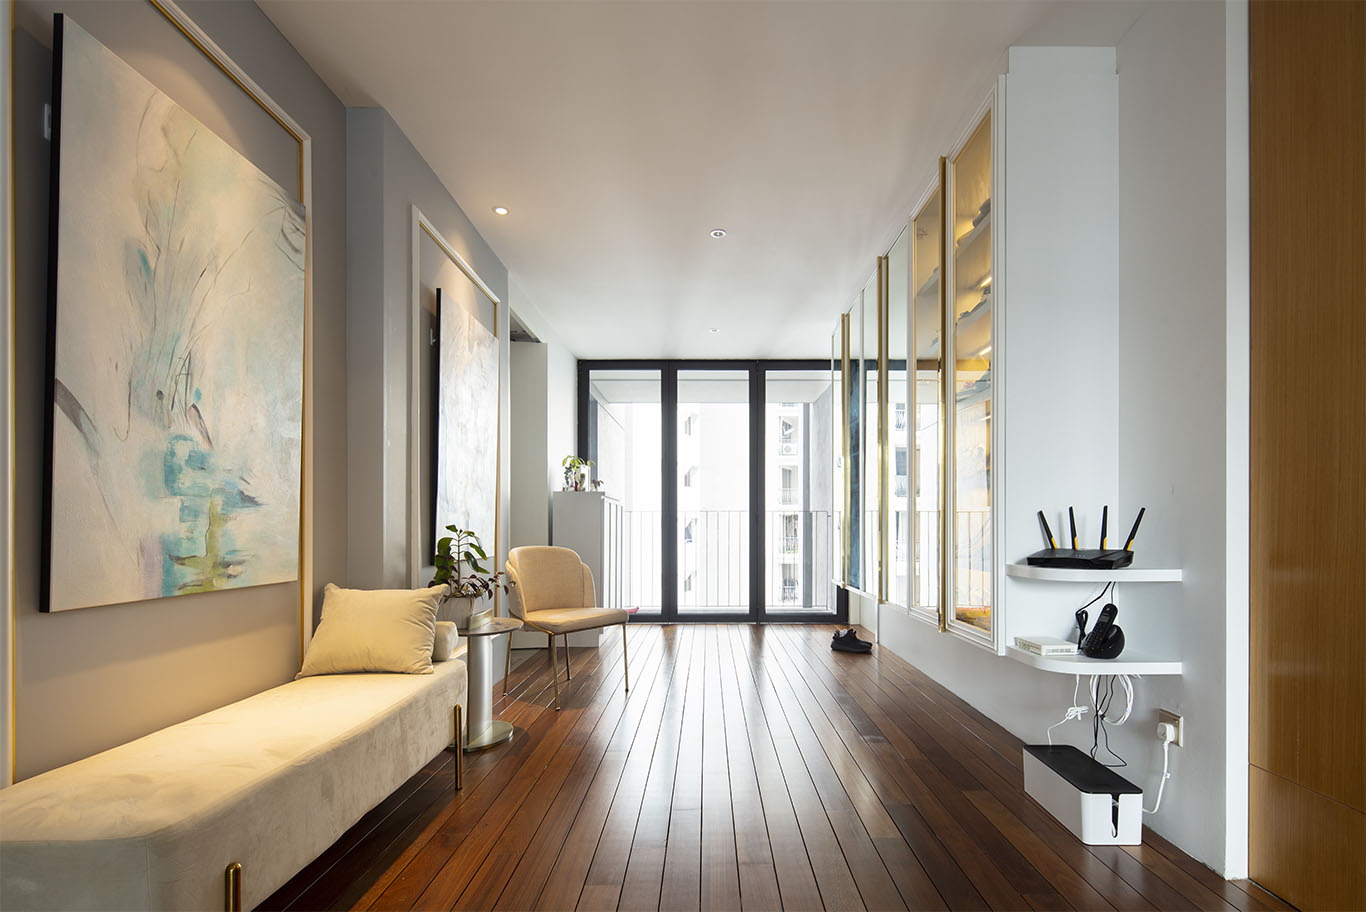 Modern hallway with wooden floor, long velvet chair, modern art display, and glass sliding door